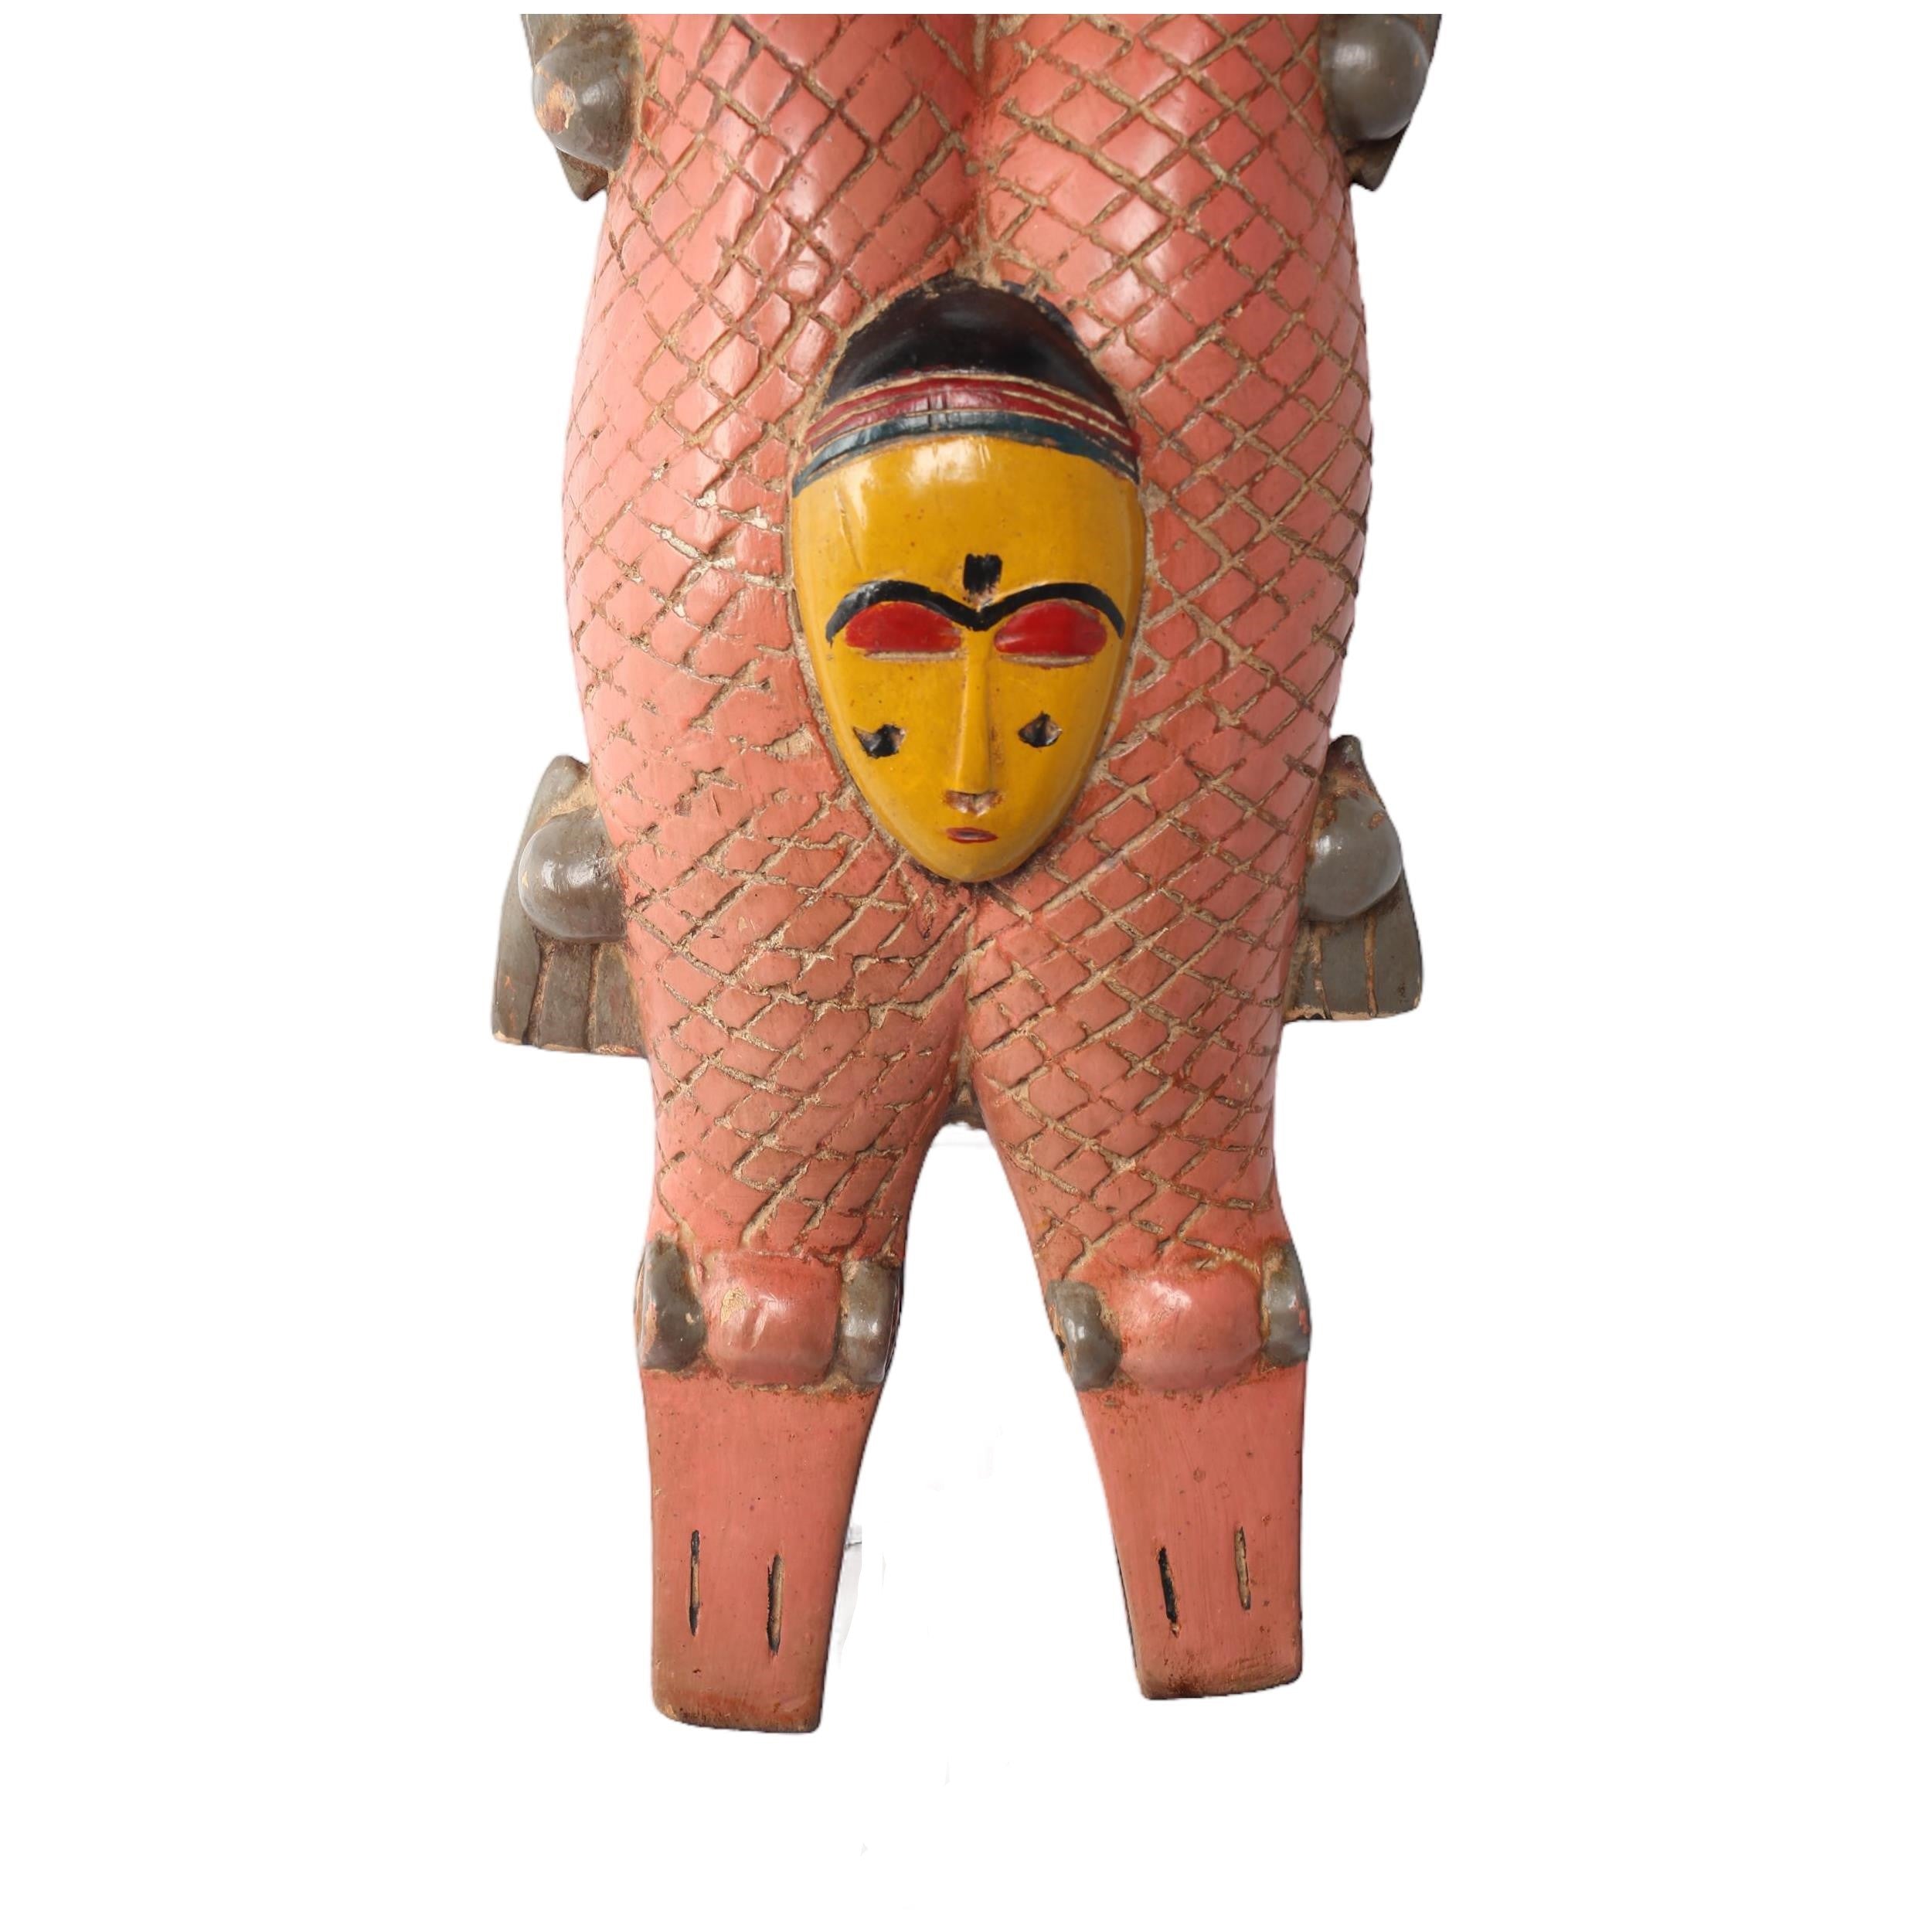 Guro Tribe Mask ~21.7" Tall